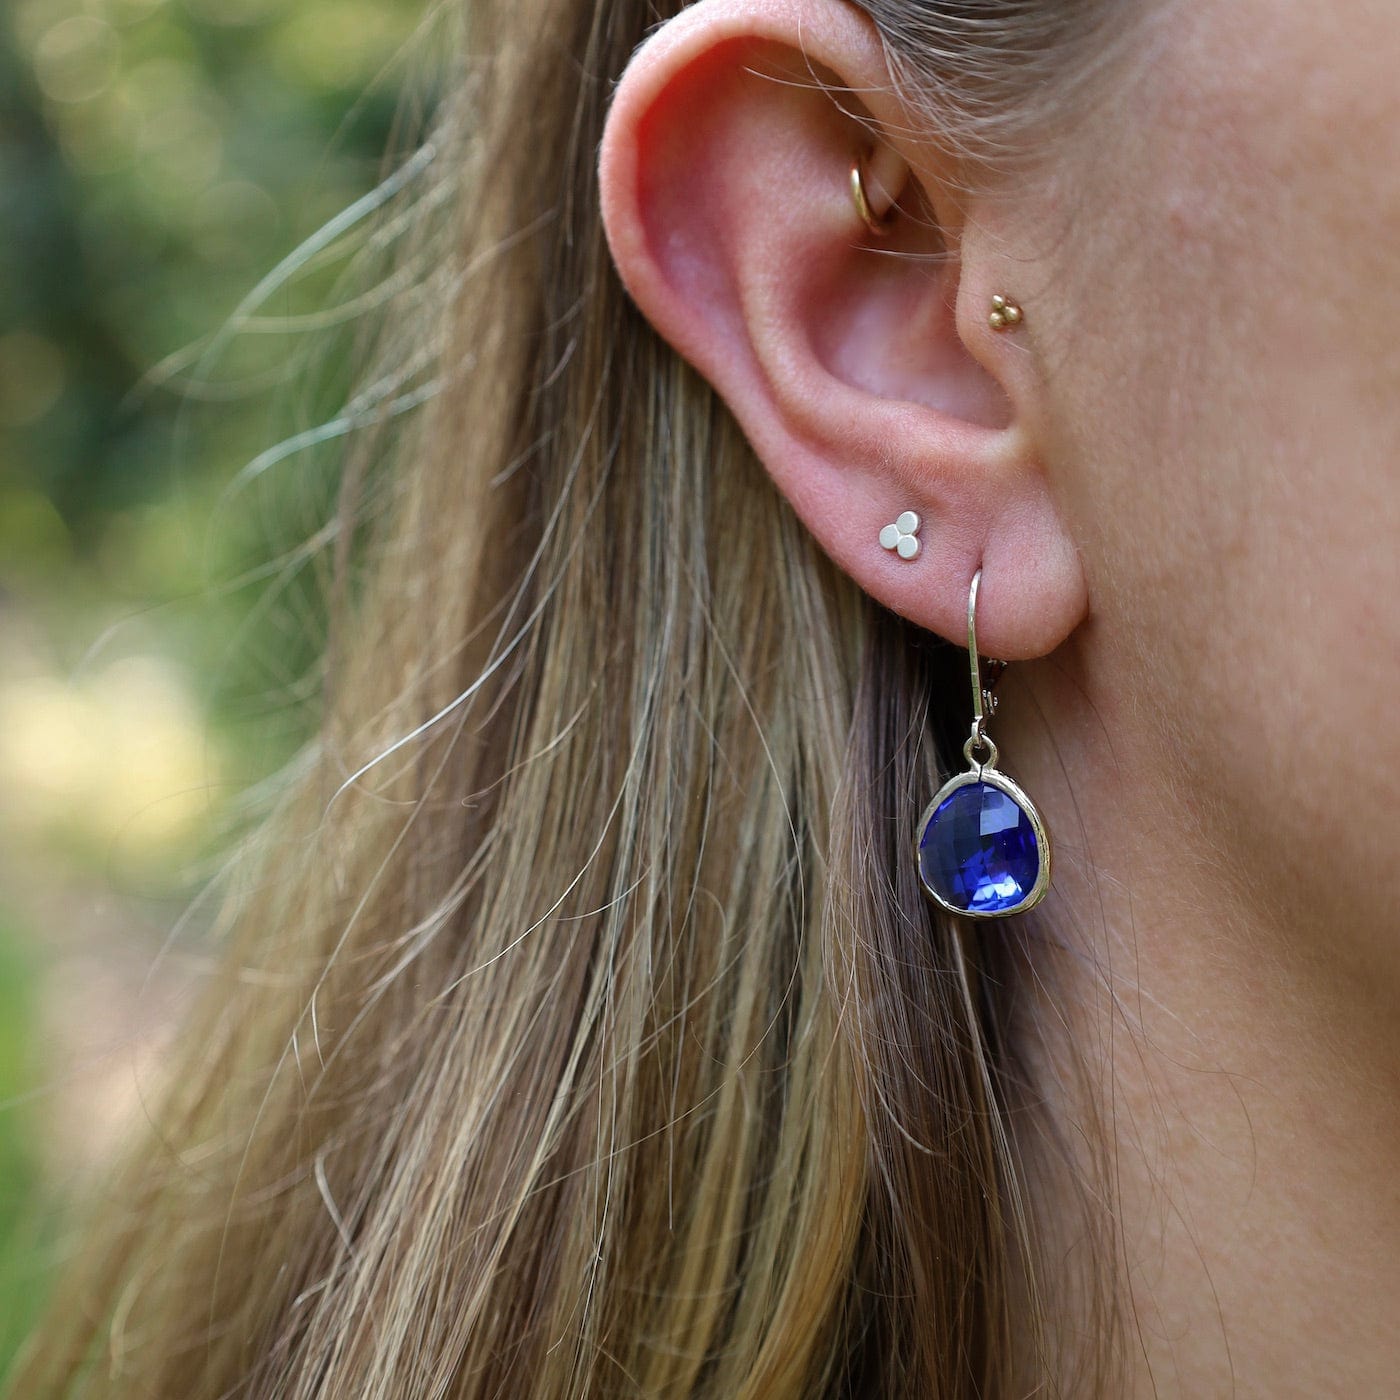 EAR Sterling Silver Crystal Lever Back Earrings - Cobalt